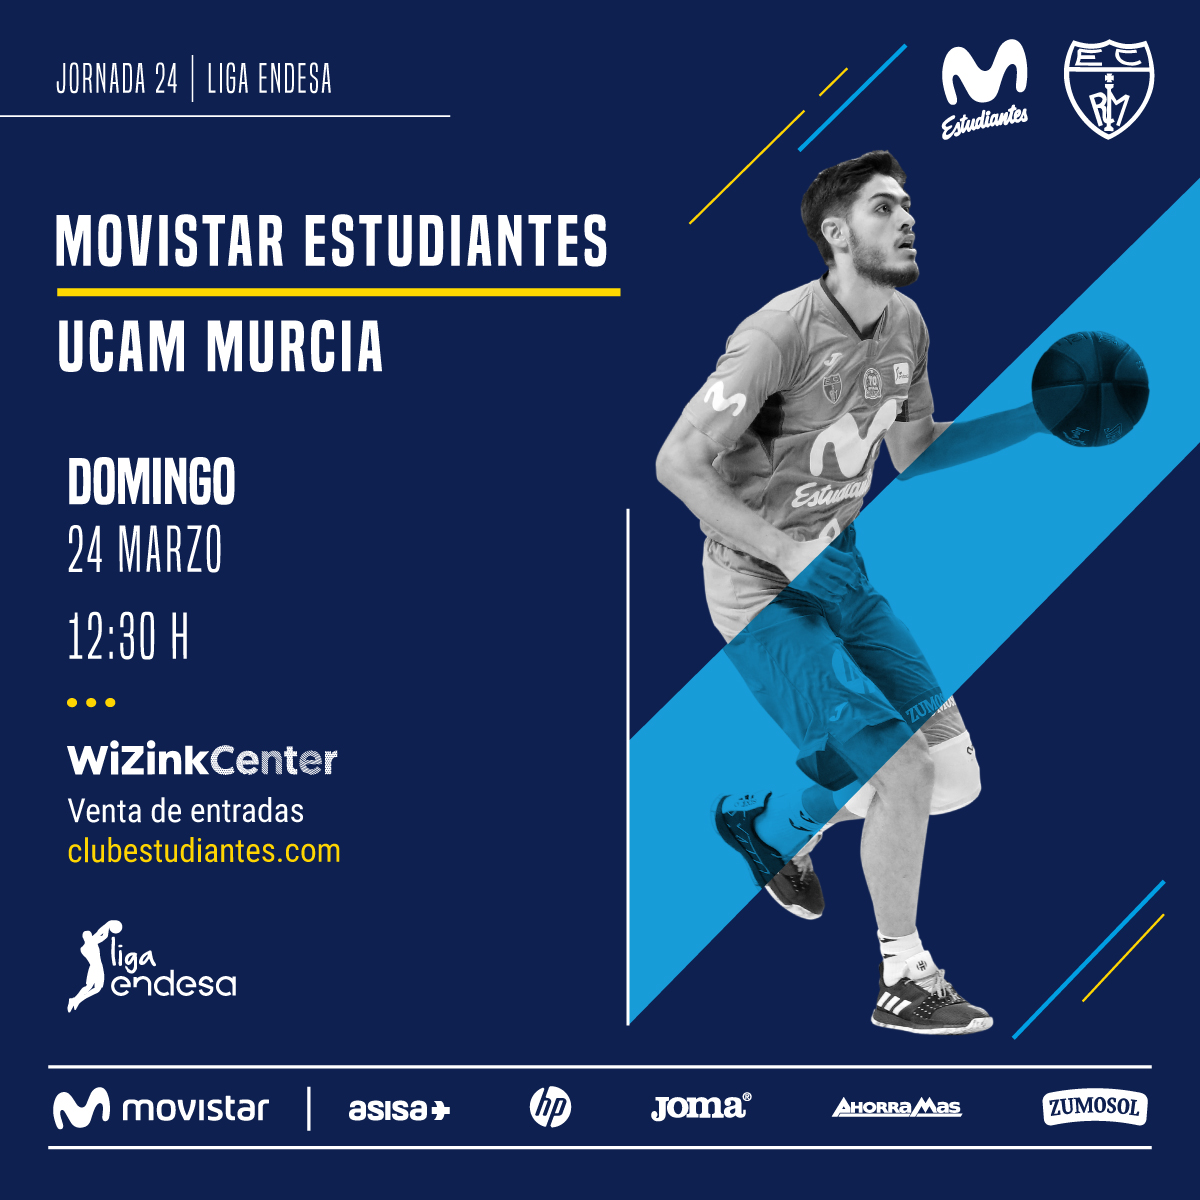 Movistar Estu – UCAM Murcia dom. 24, 12:30h